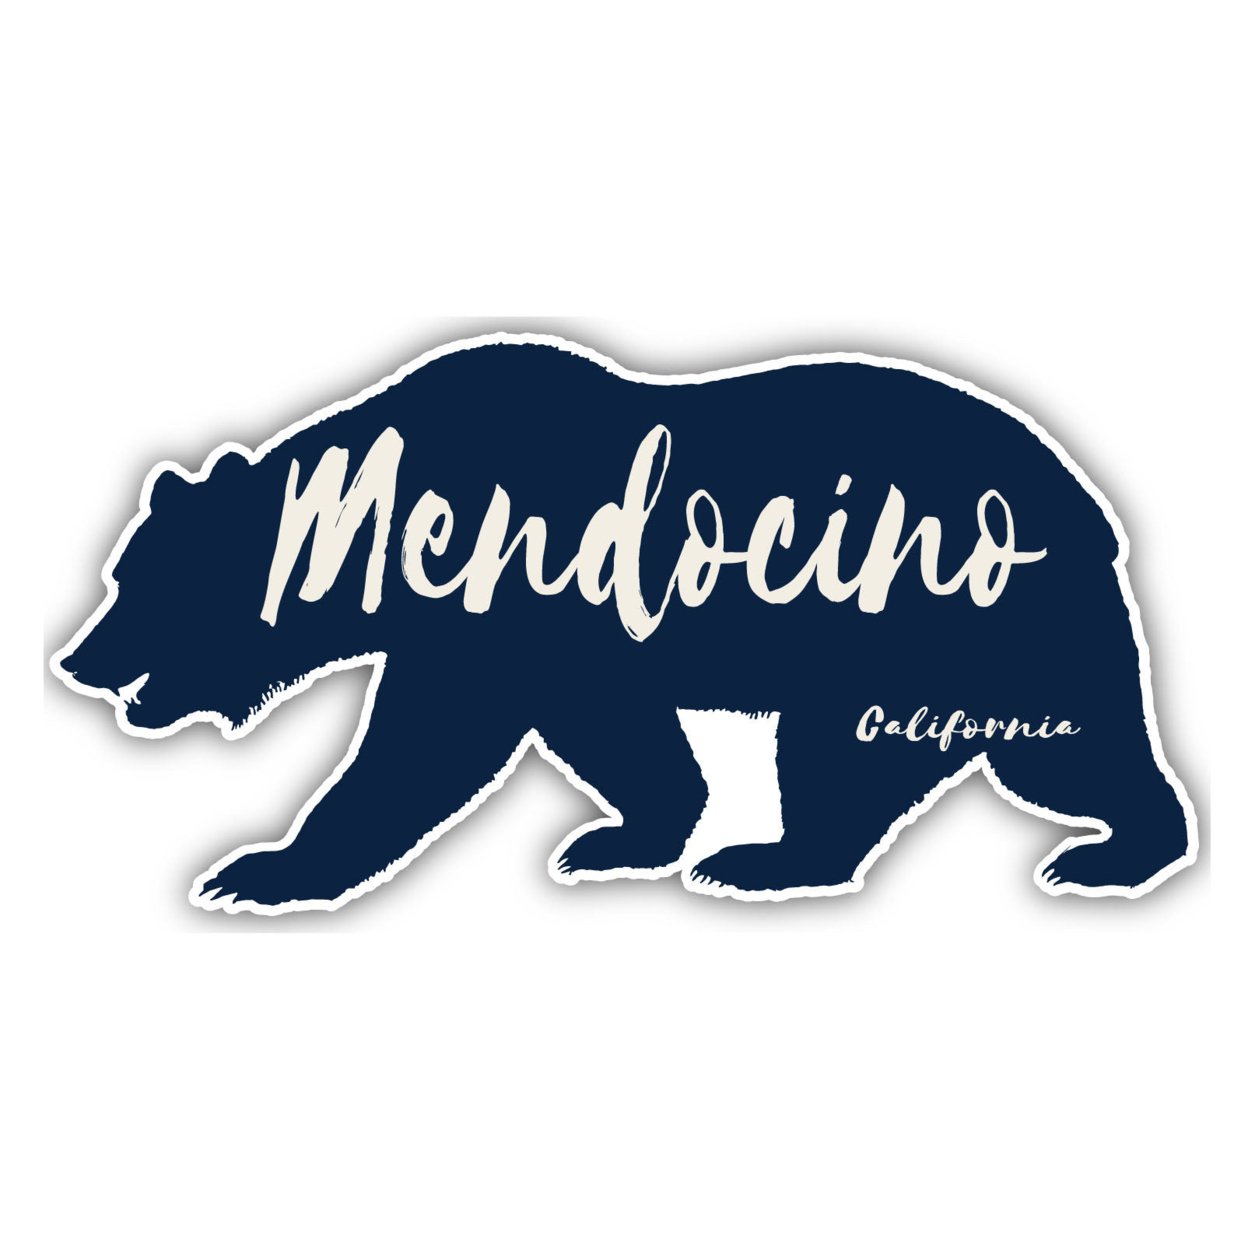 Mendocino California Souvenir Decorative Stickers (Choose Theme And Size) - 4-Inch, Tent